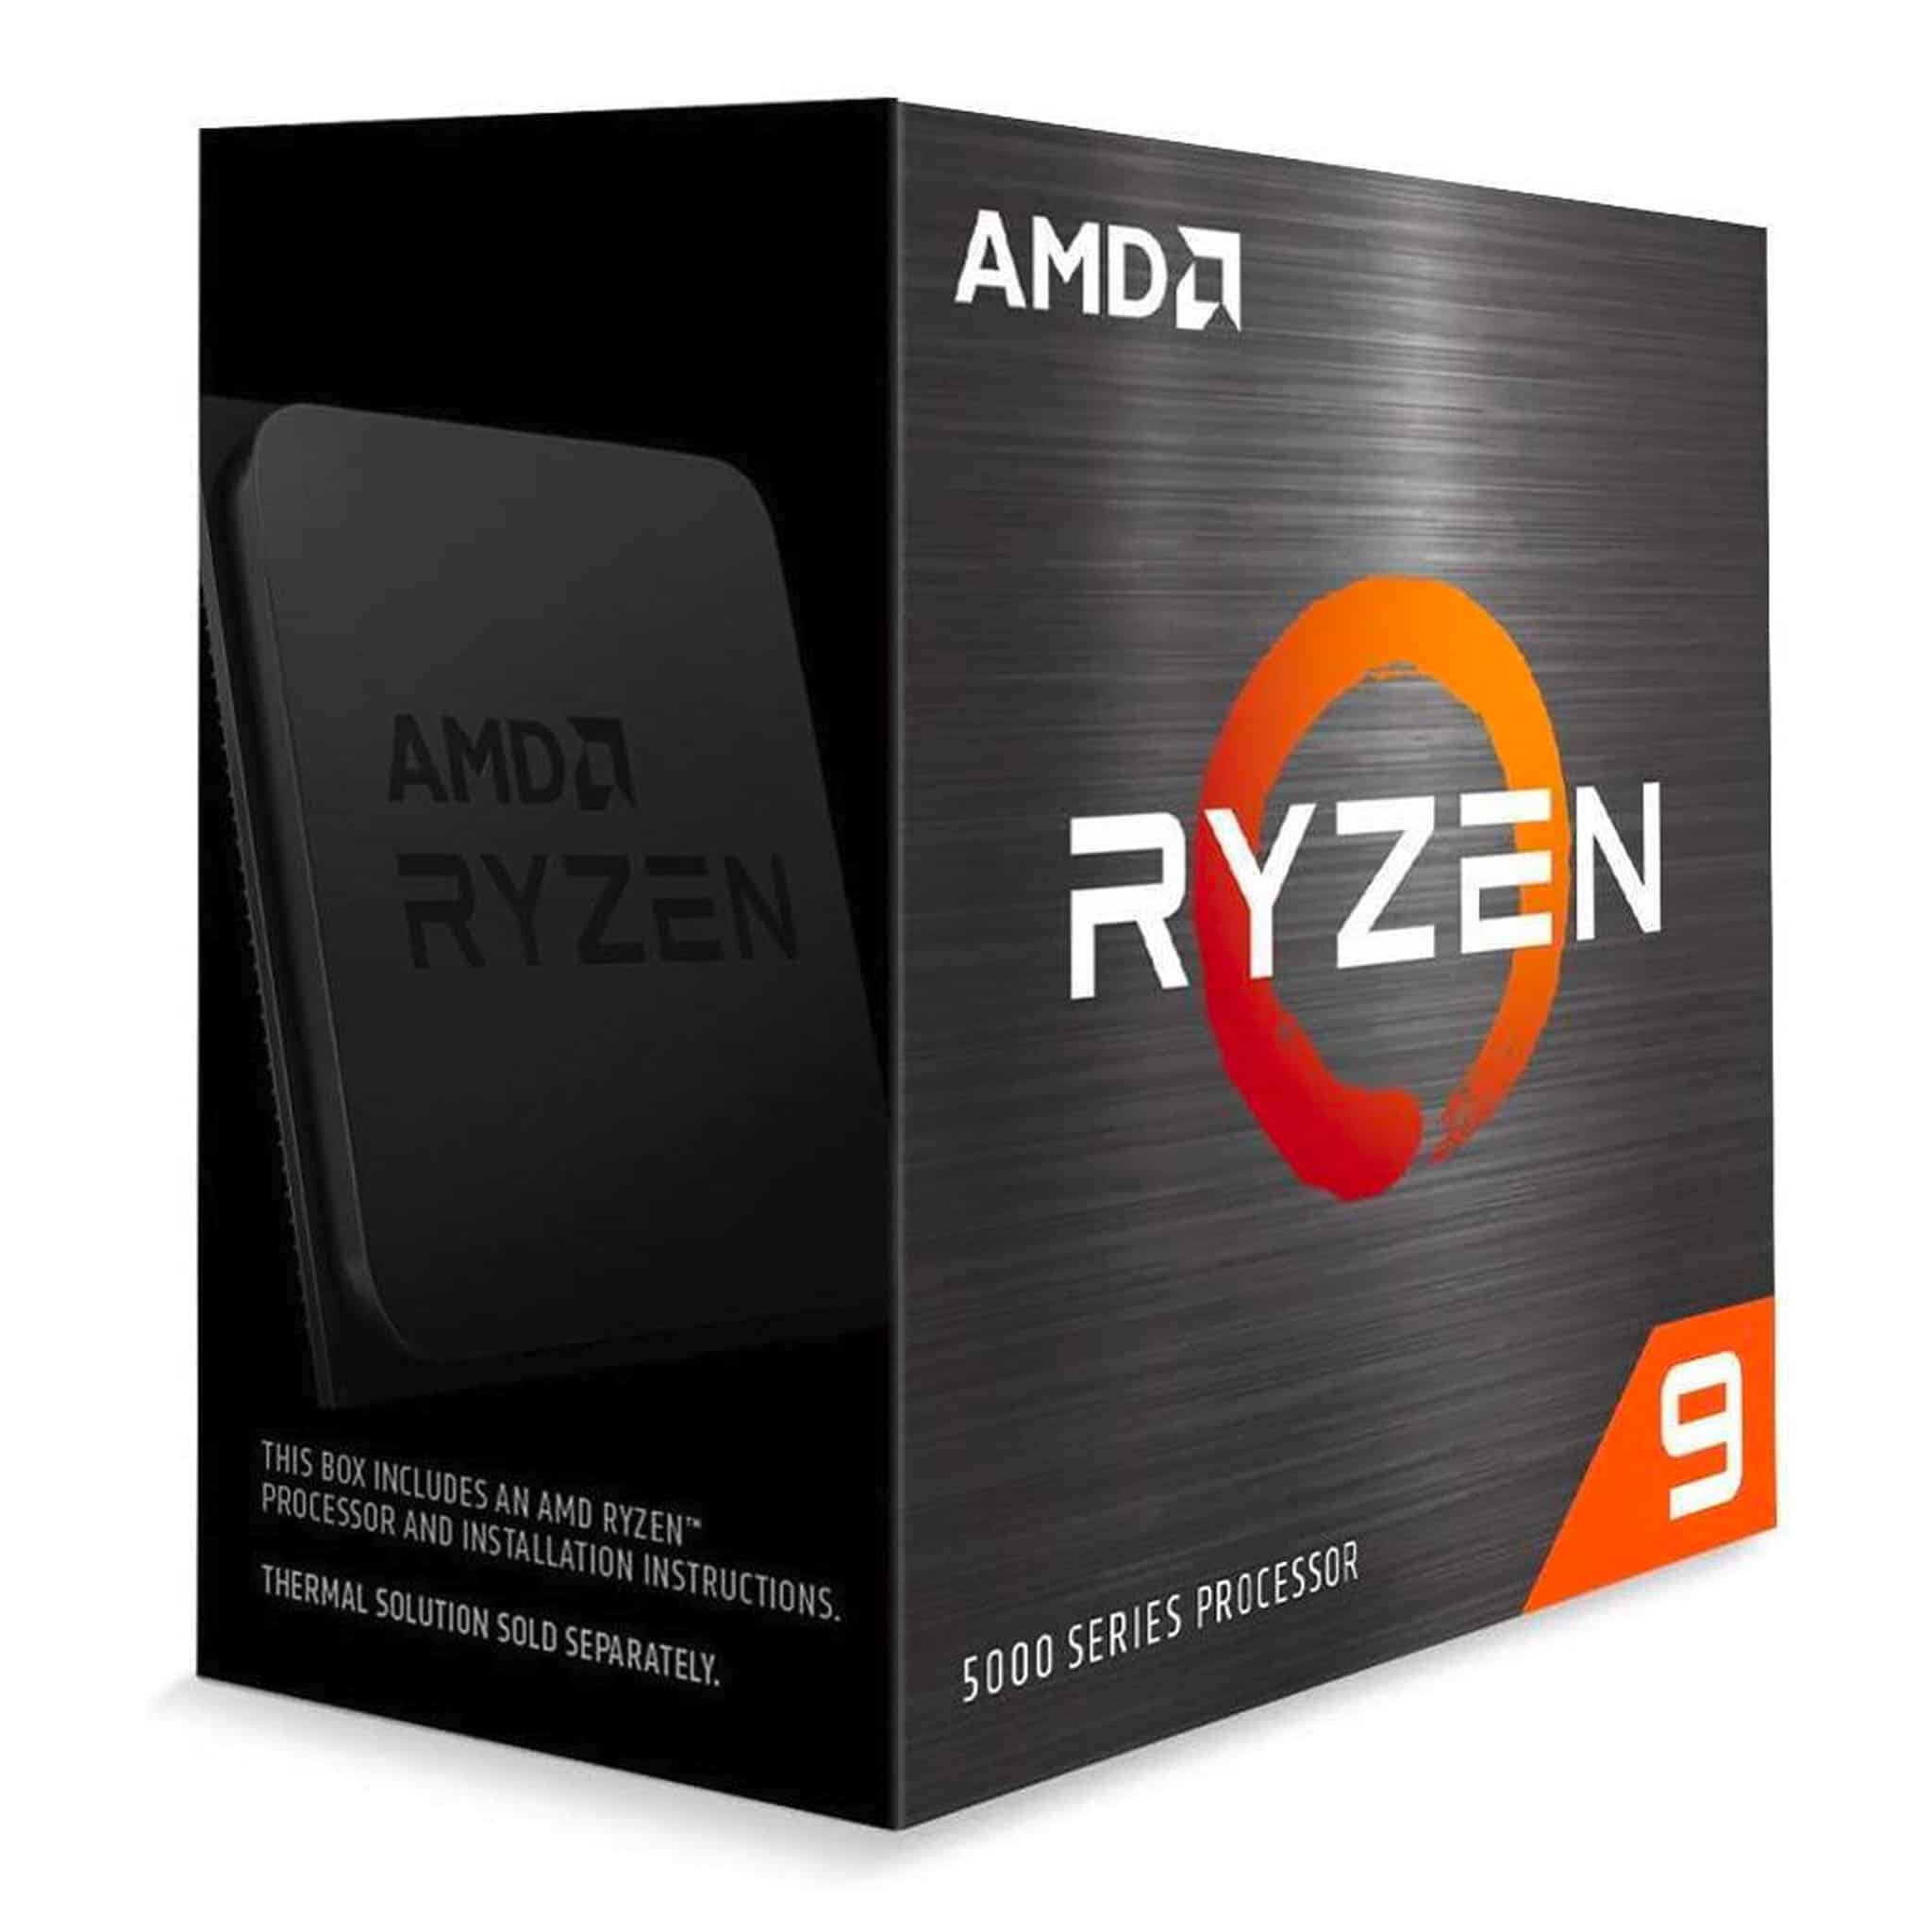 AMD Ryzen 9 5950X 16 Core AM4 3.40 GHz Unlocked CPU Processor (4.9 GHz Max Boost)